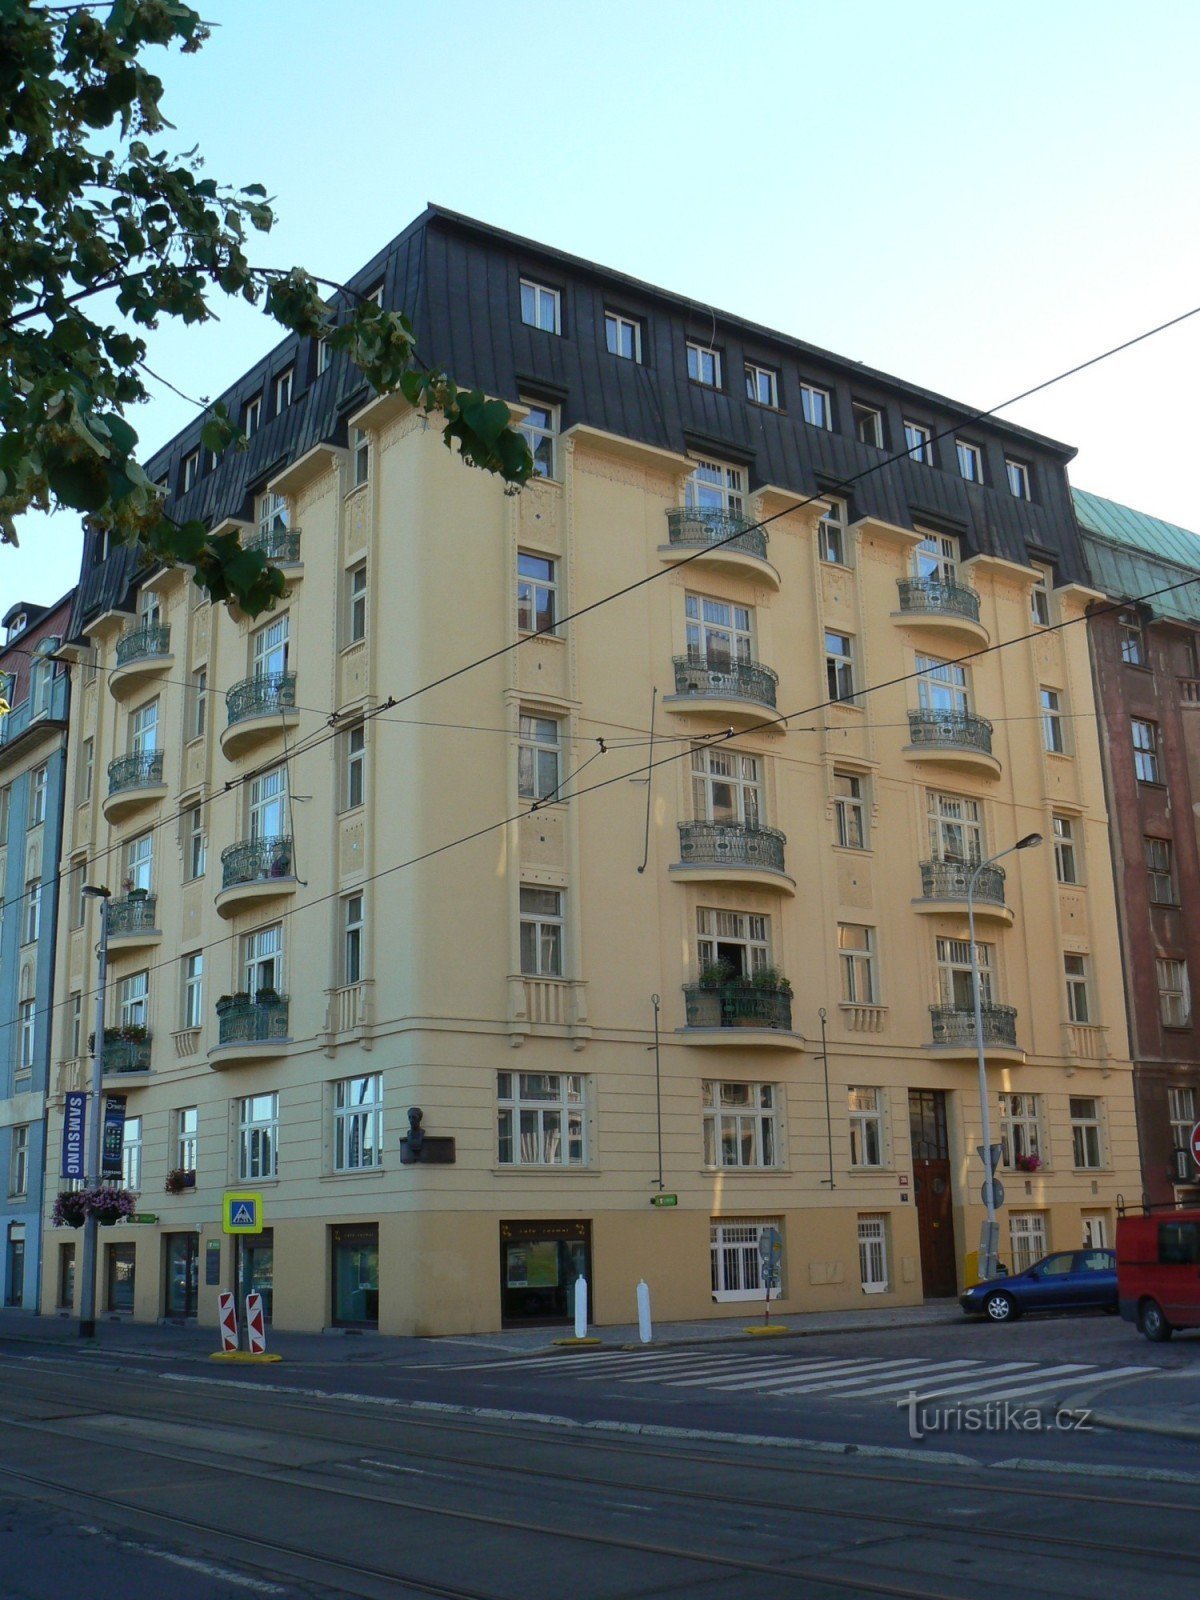 Casa Trojická nr. 1